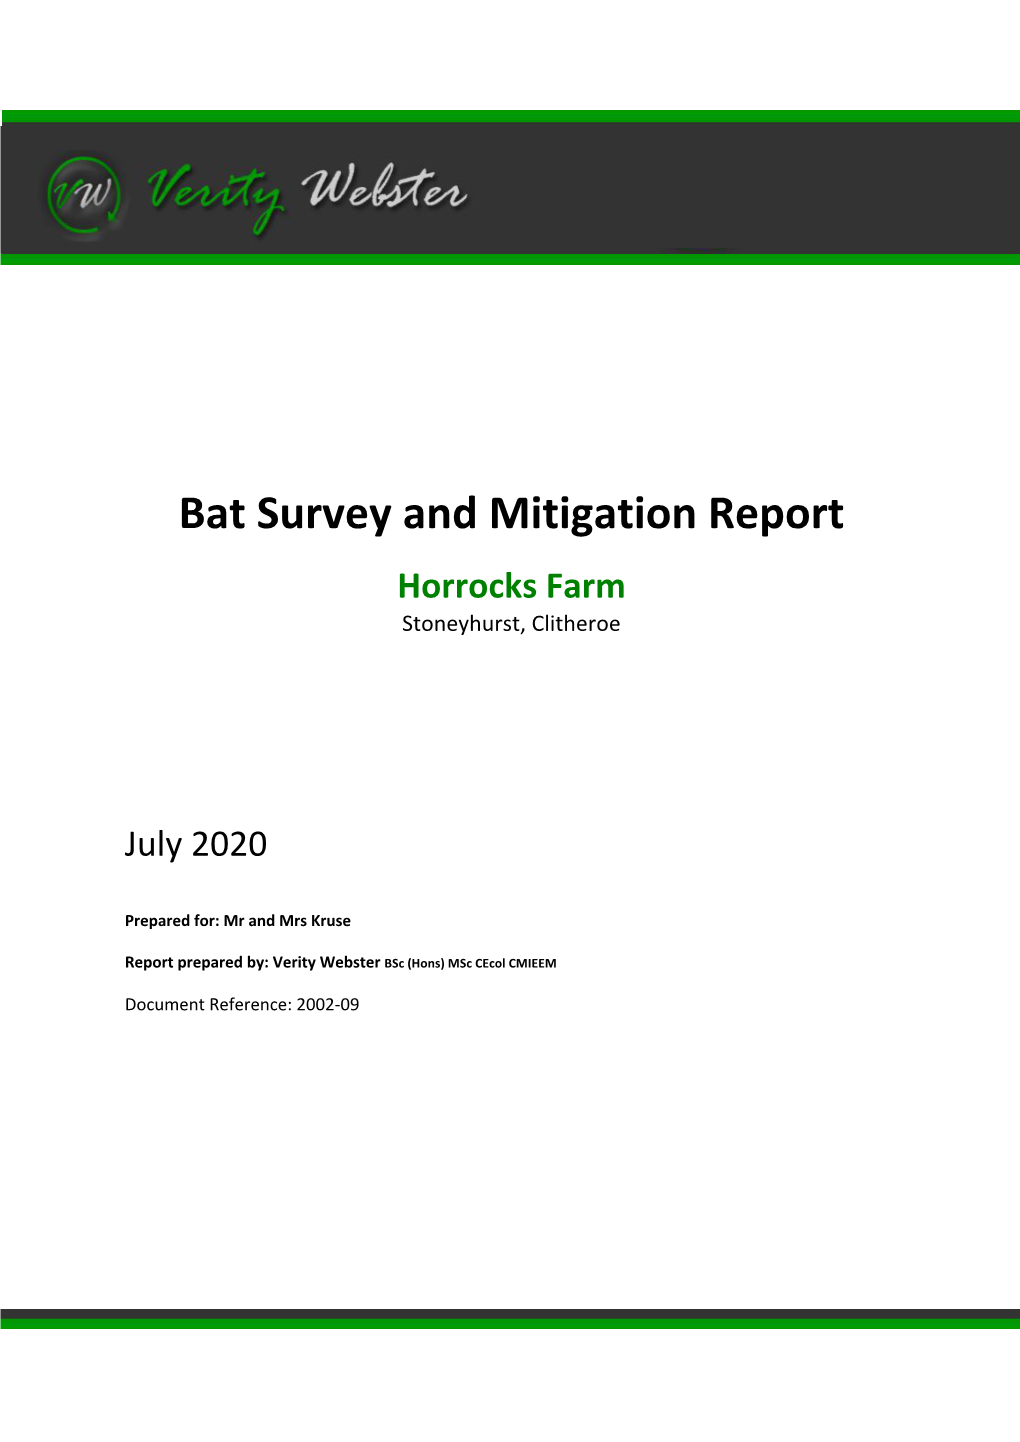 Bat Survey and Mitigation Report Horrocks Farm Stoneyhurst, Clitheroe